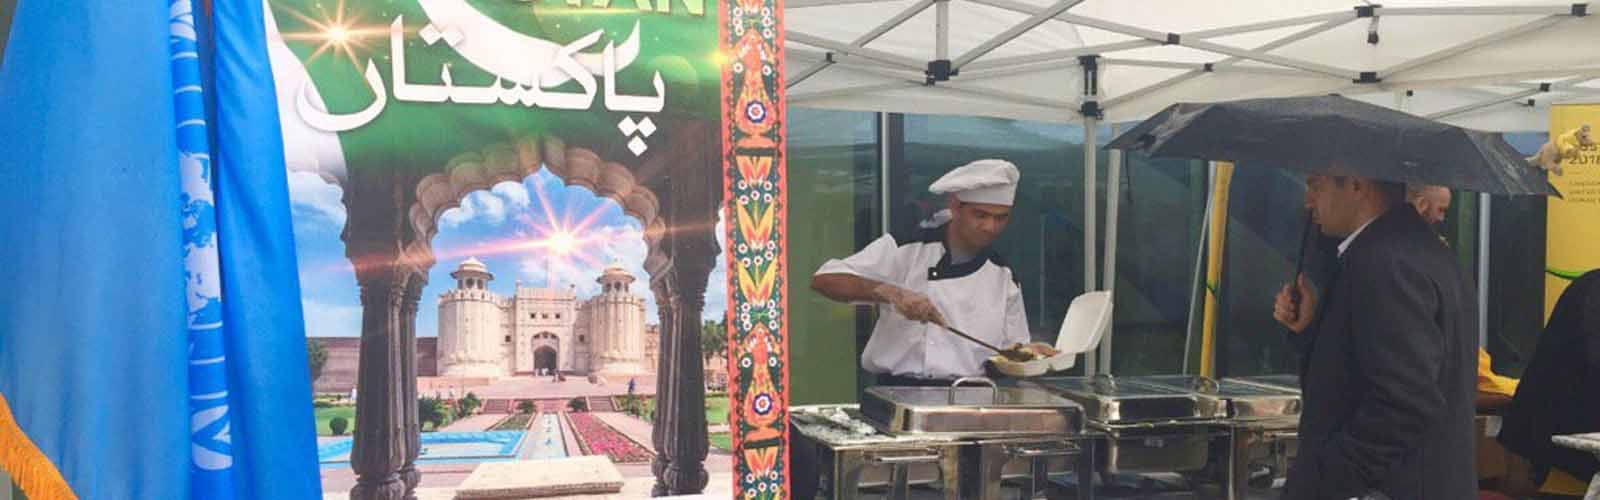 Pakistani stalls in UN International Bazaar